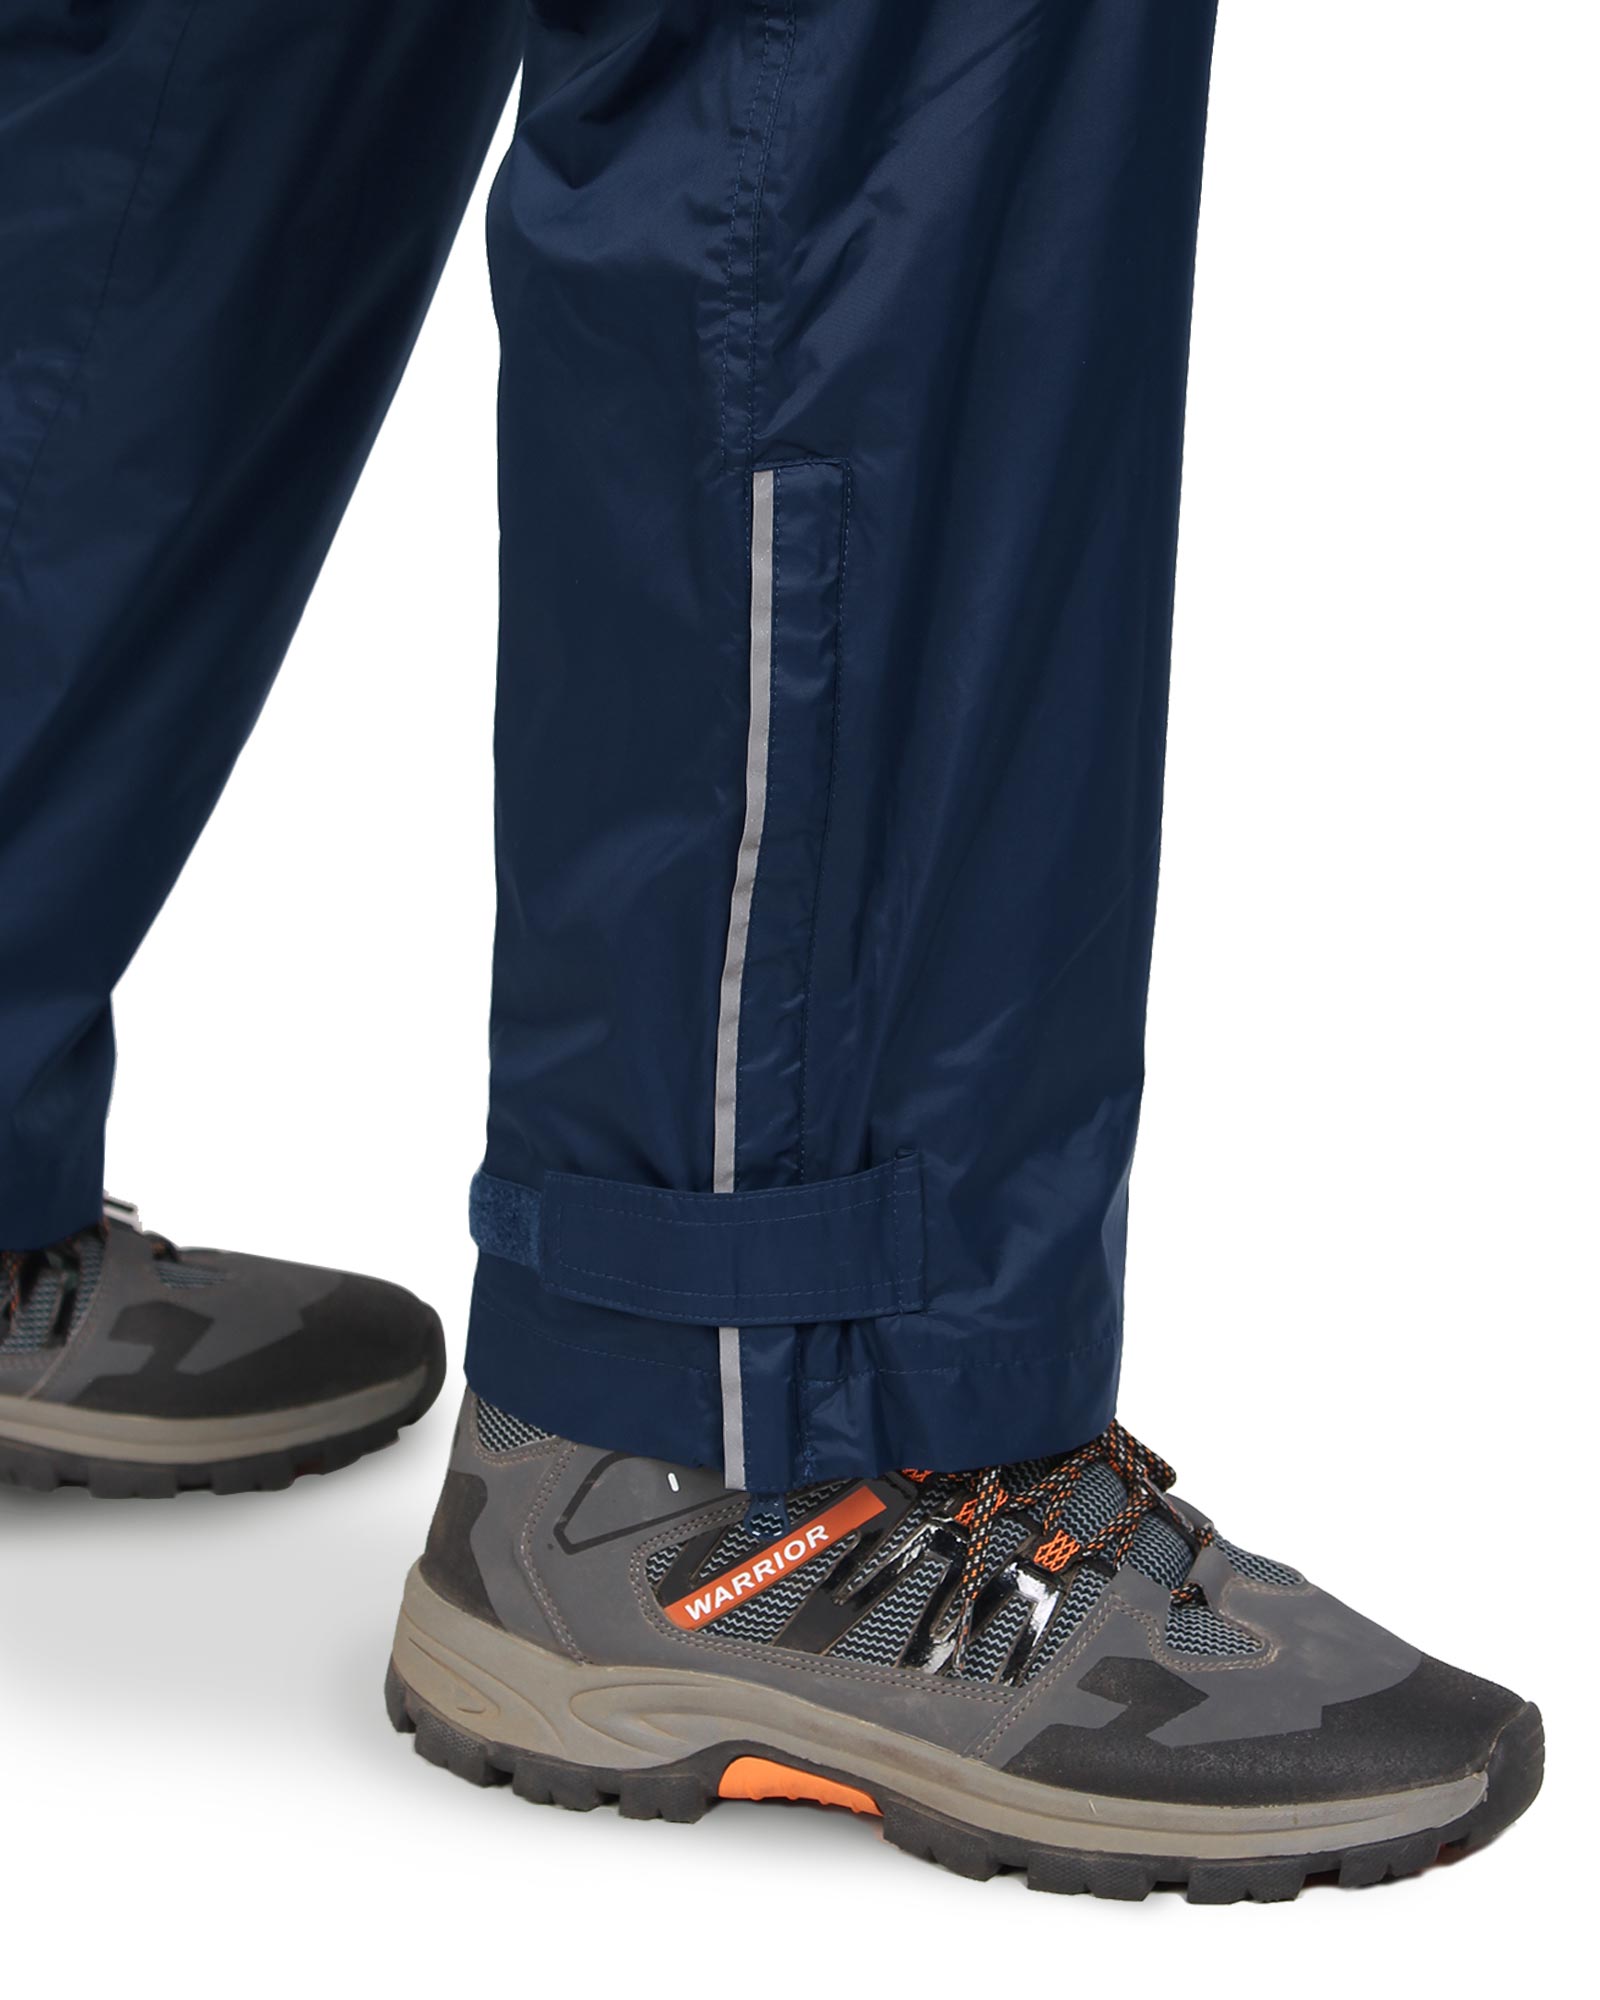 Best Deal for Inno Men's 30 32 34 Waterproof Hiking Pants